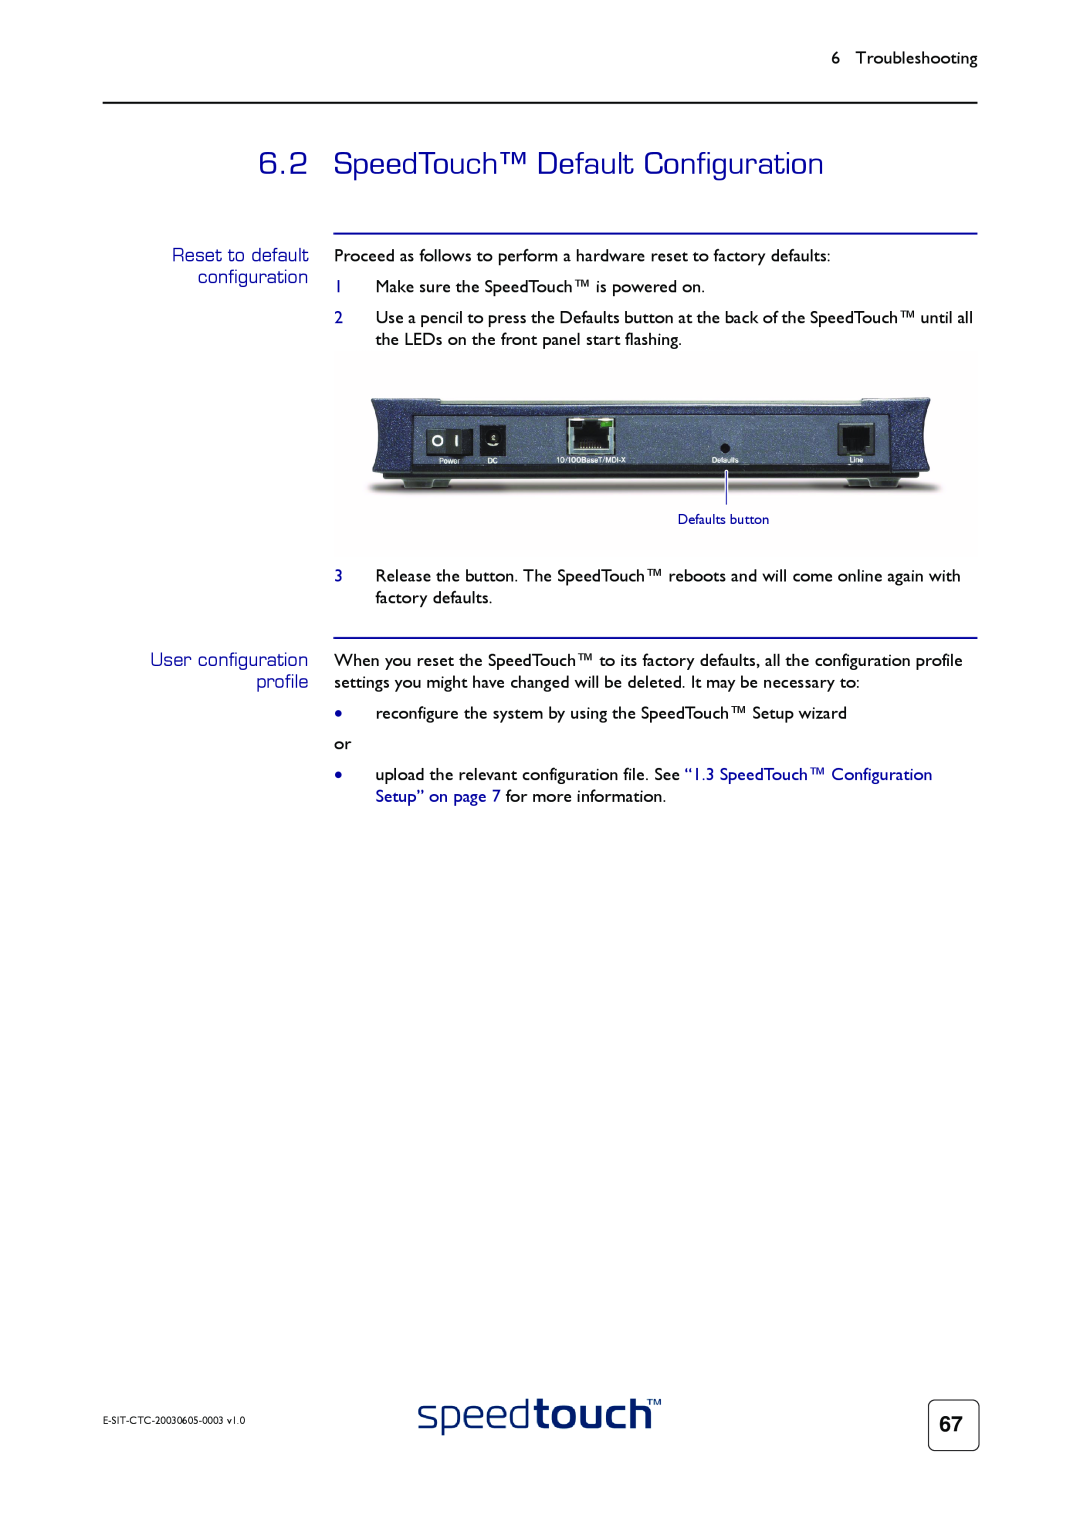 Technicolor - Thomson 605S manual SpeedTouch Default Configuration, Reset to default configuration 